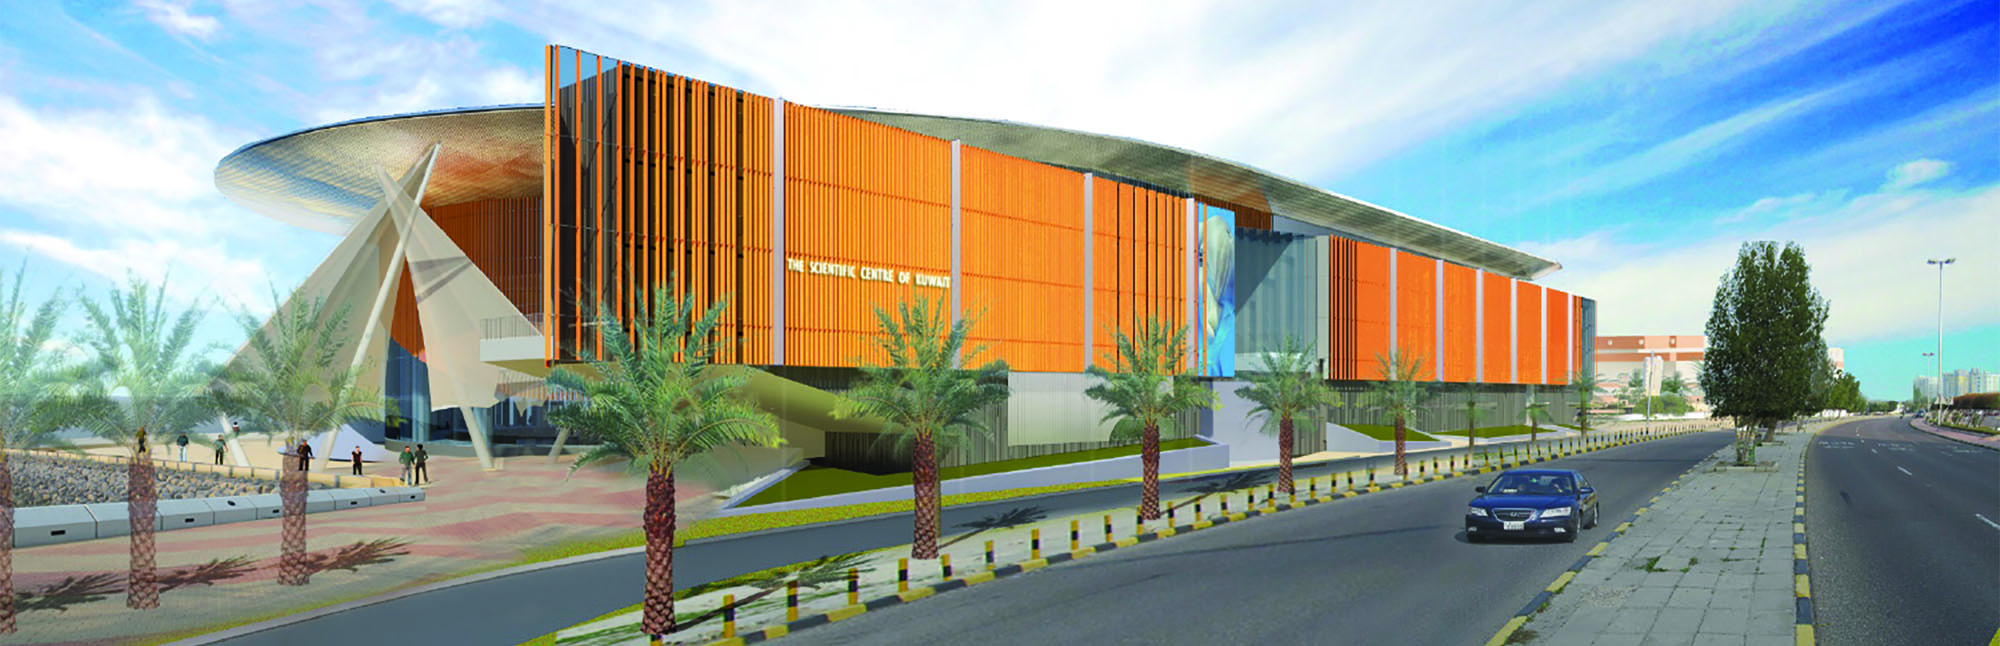 The Scientific Center of Kuwait Expansion Program